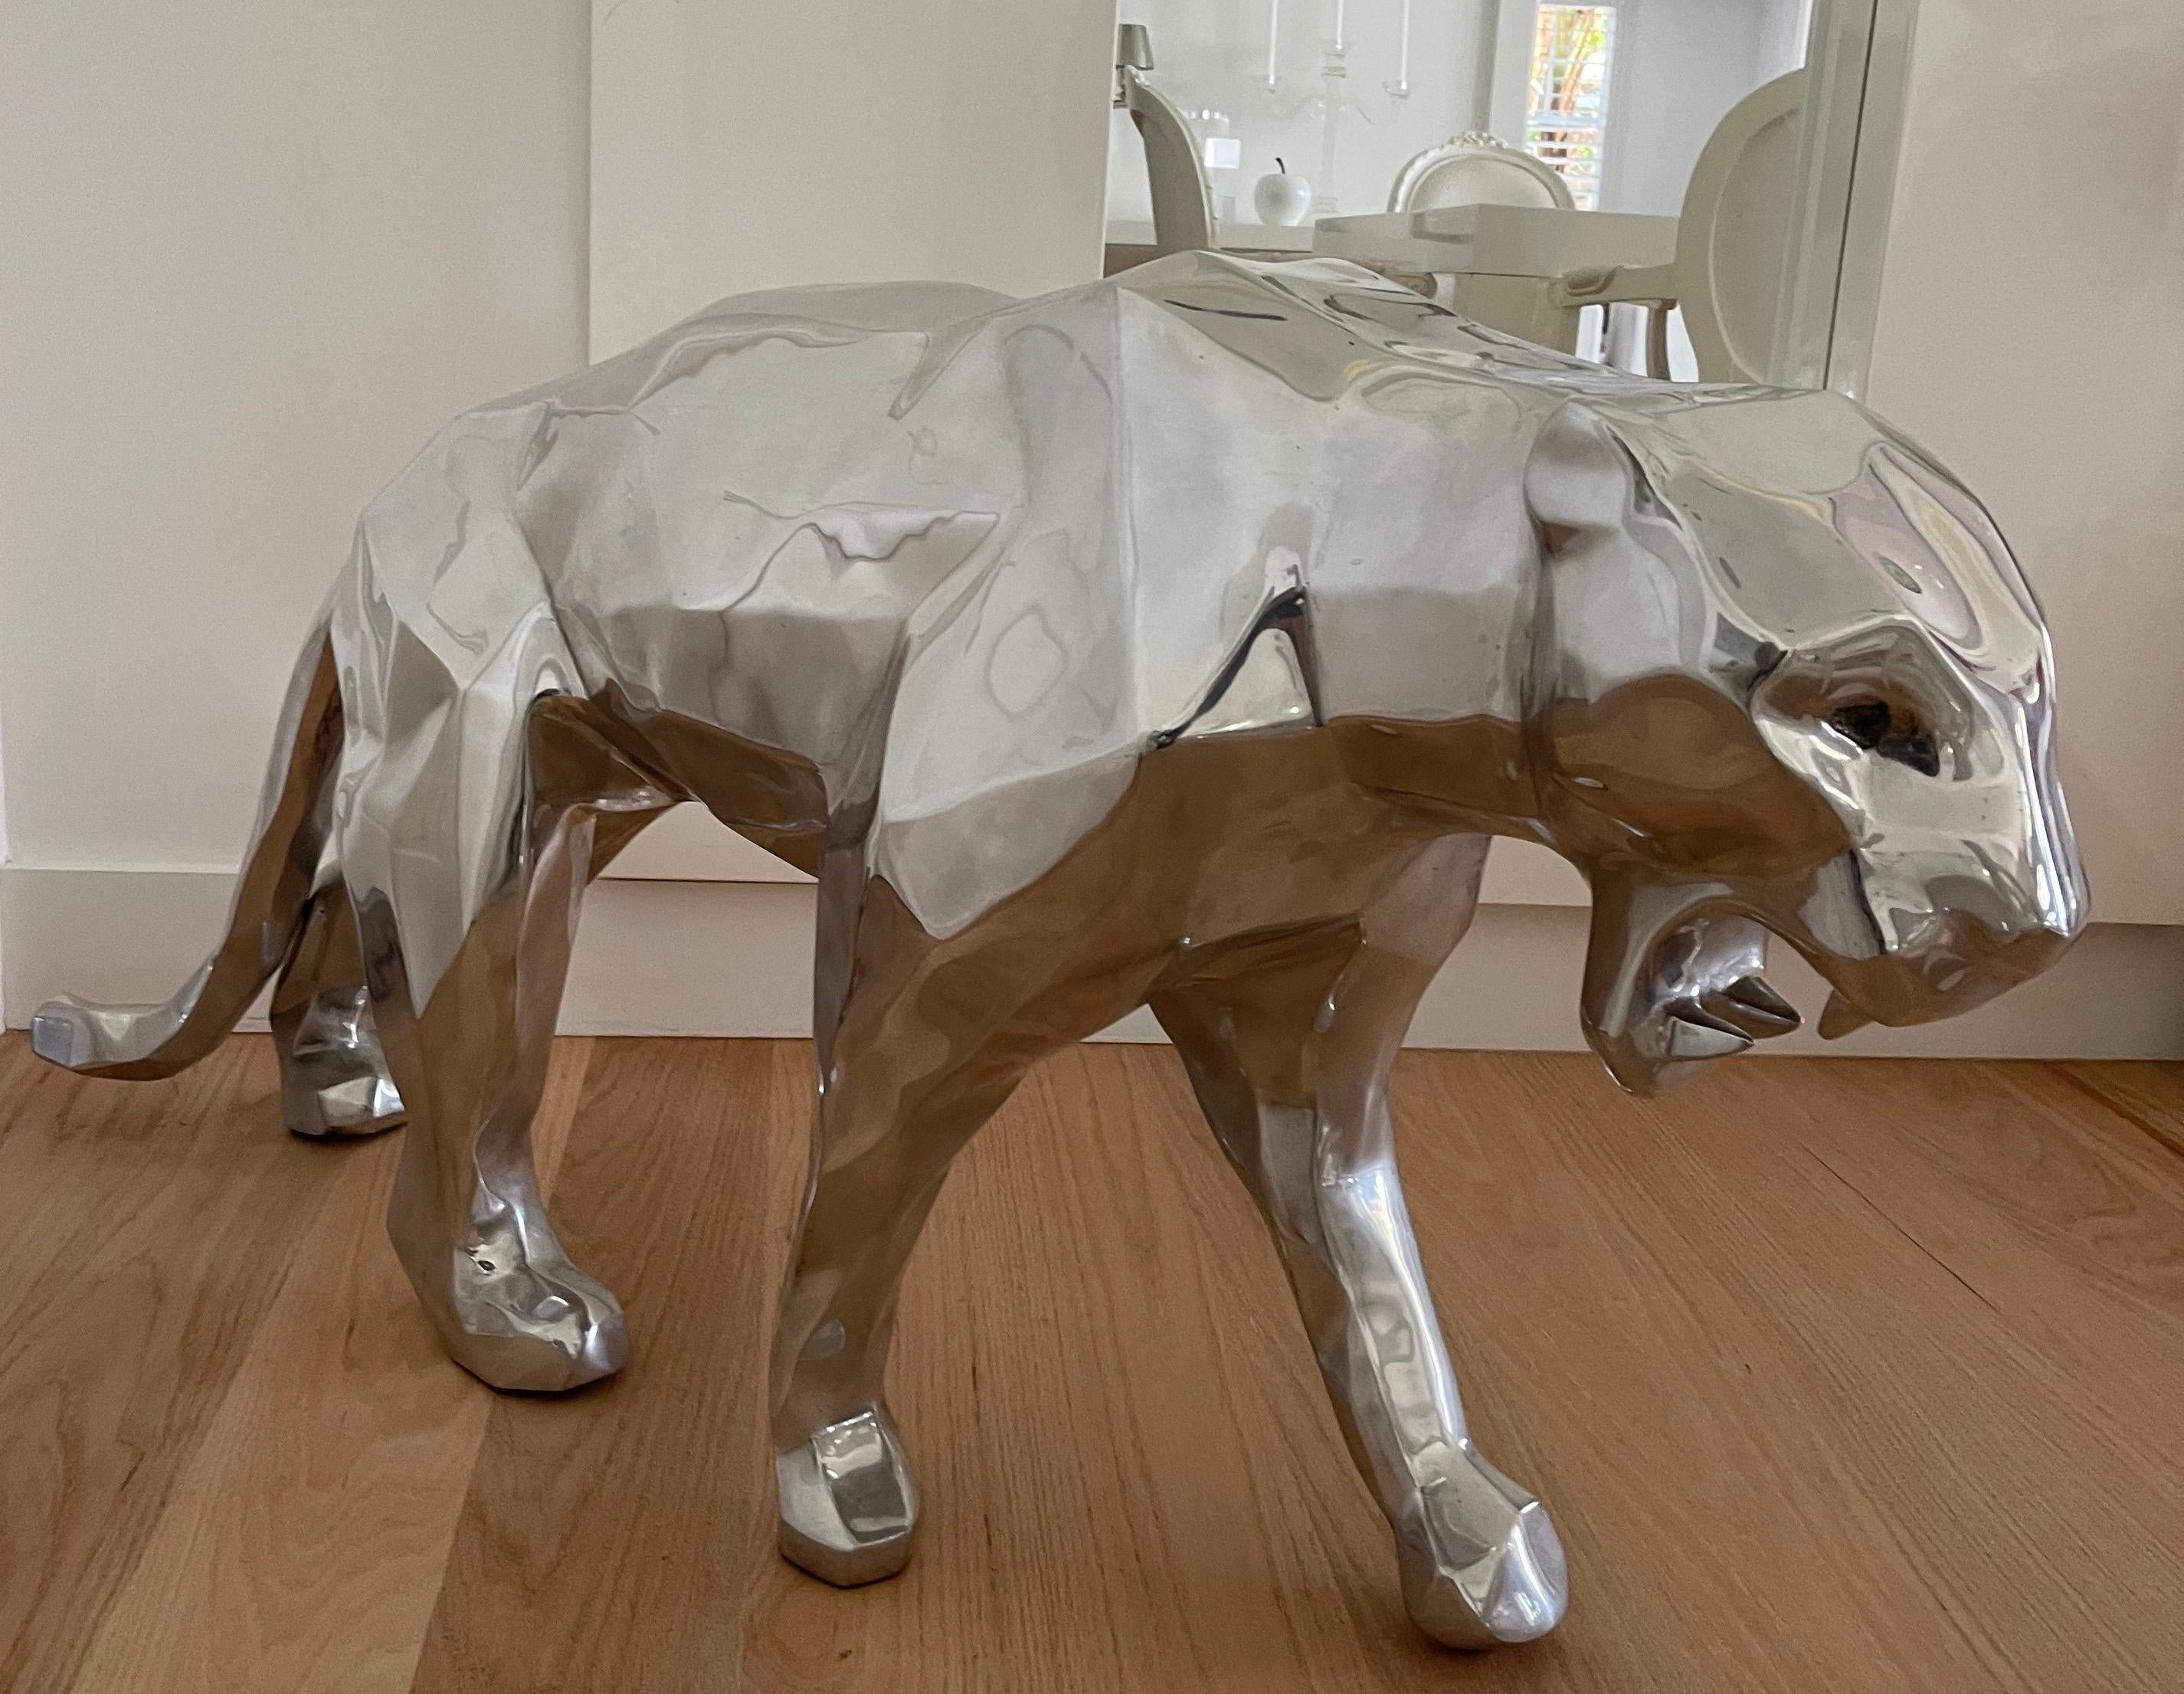 "Panther" Aluminum sculpture 60" x 28" x 14" in Ed. 1/4 COA by Richard Orlinski